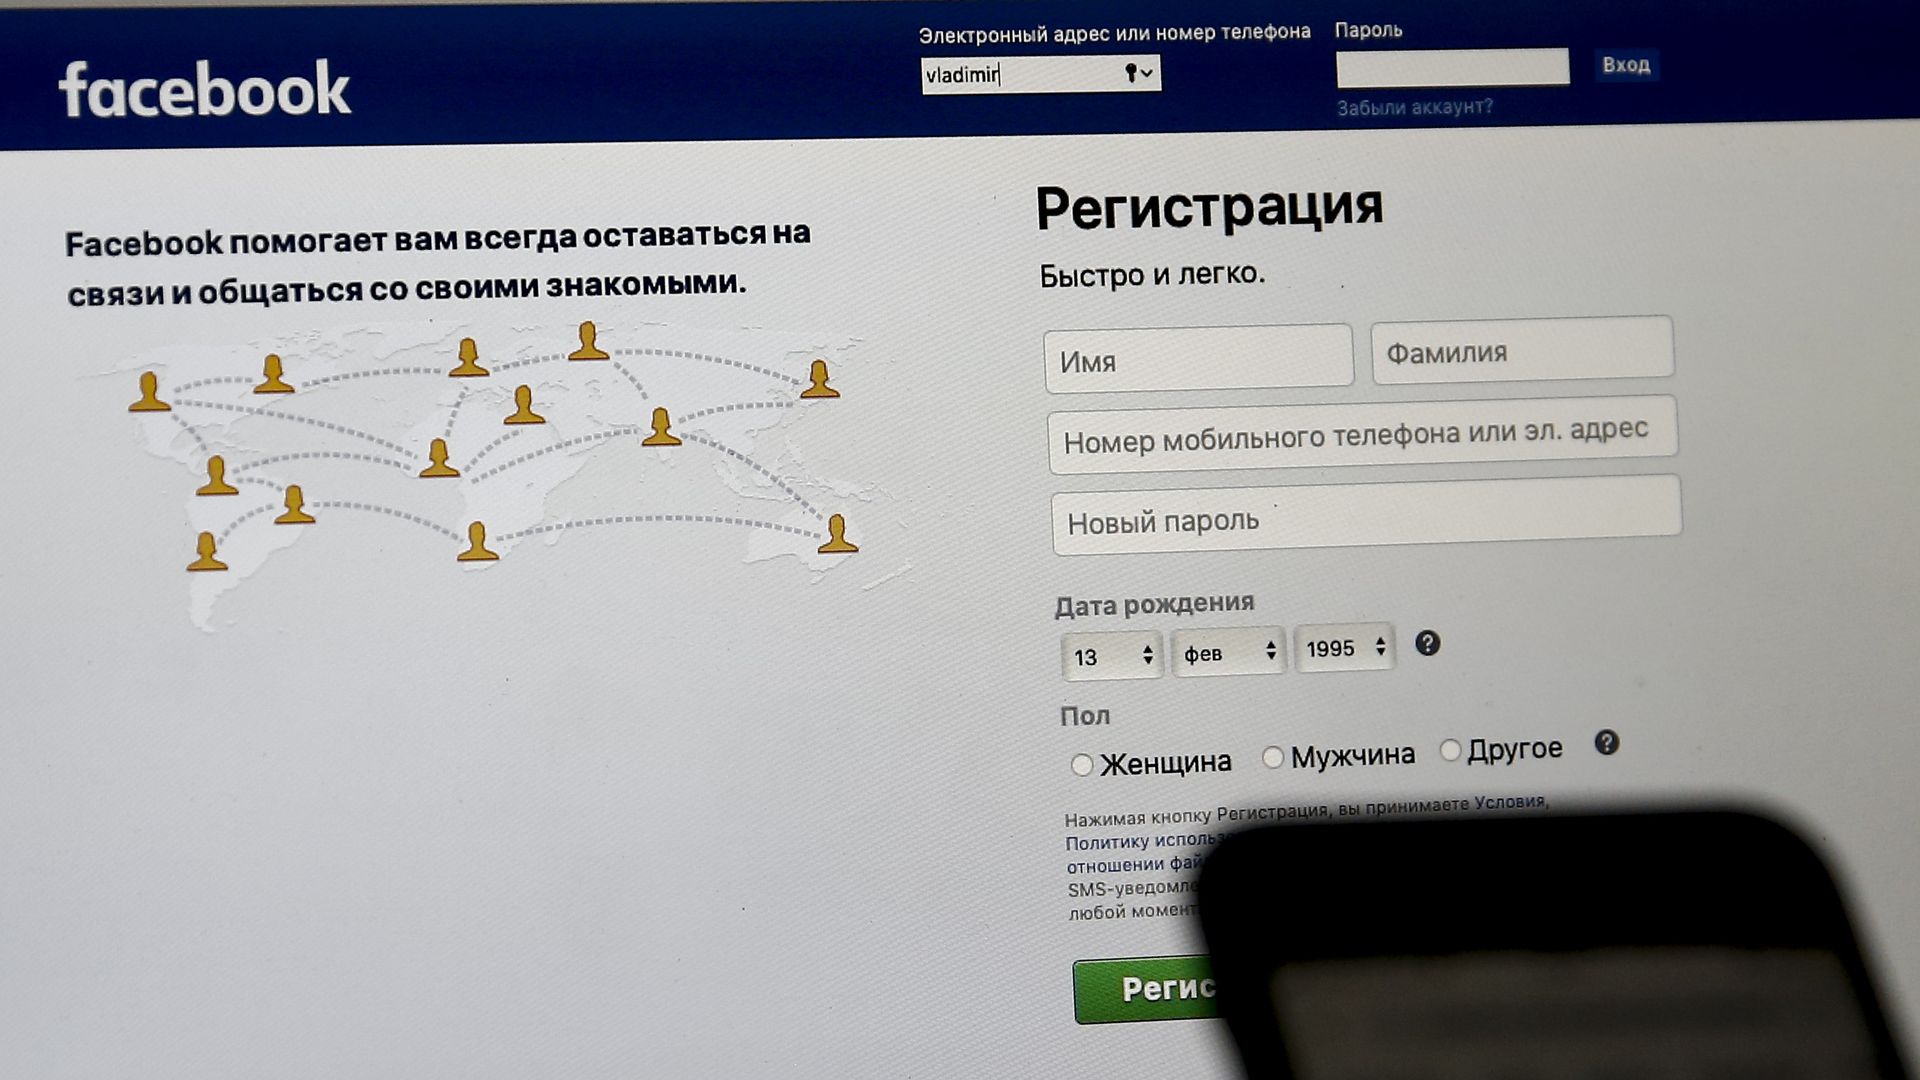 A photo of the Facebook login screen in Russian.